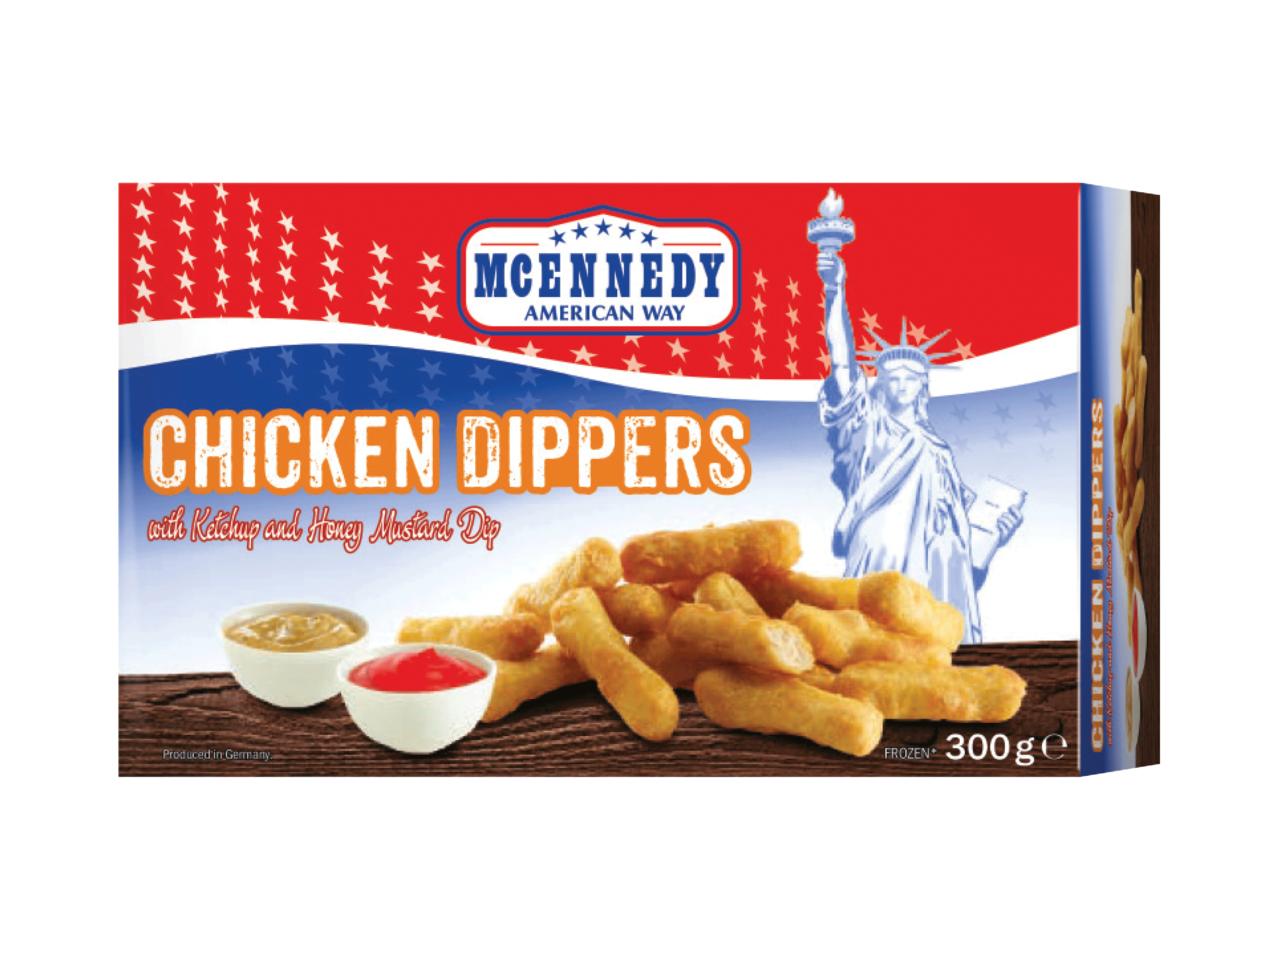 MCENNEDY(R) Chicken Dippers